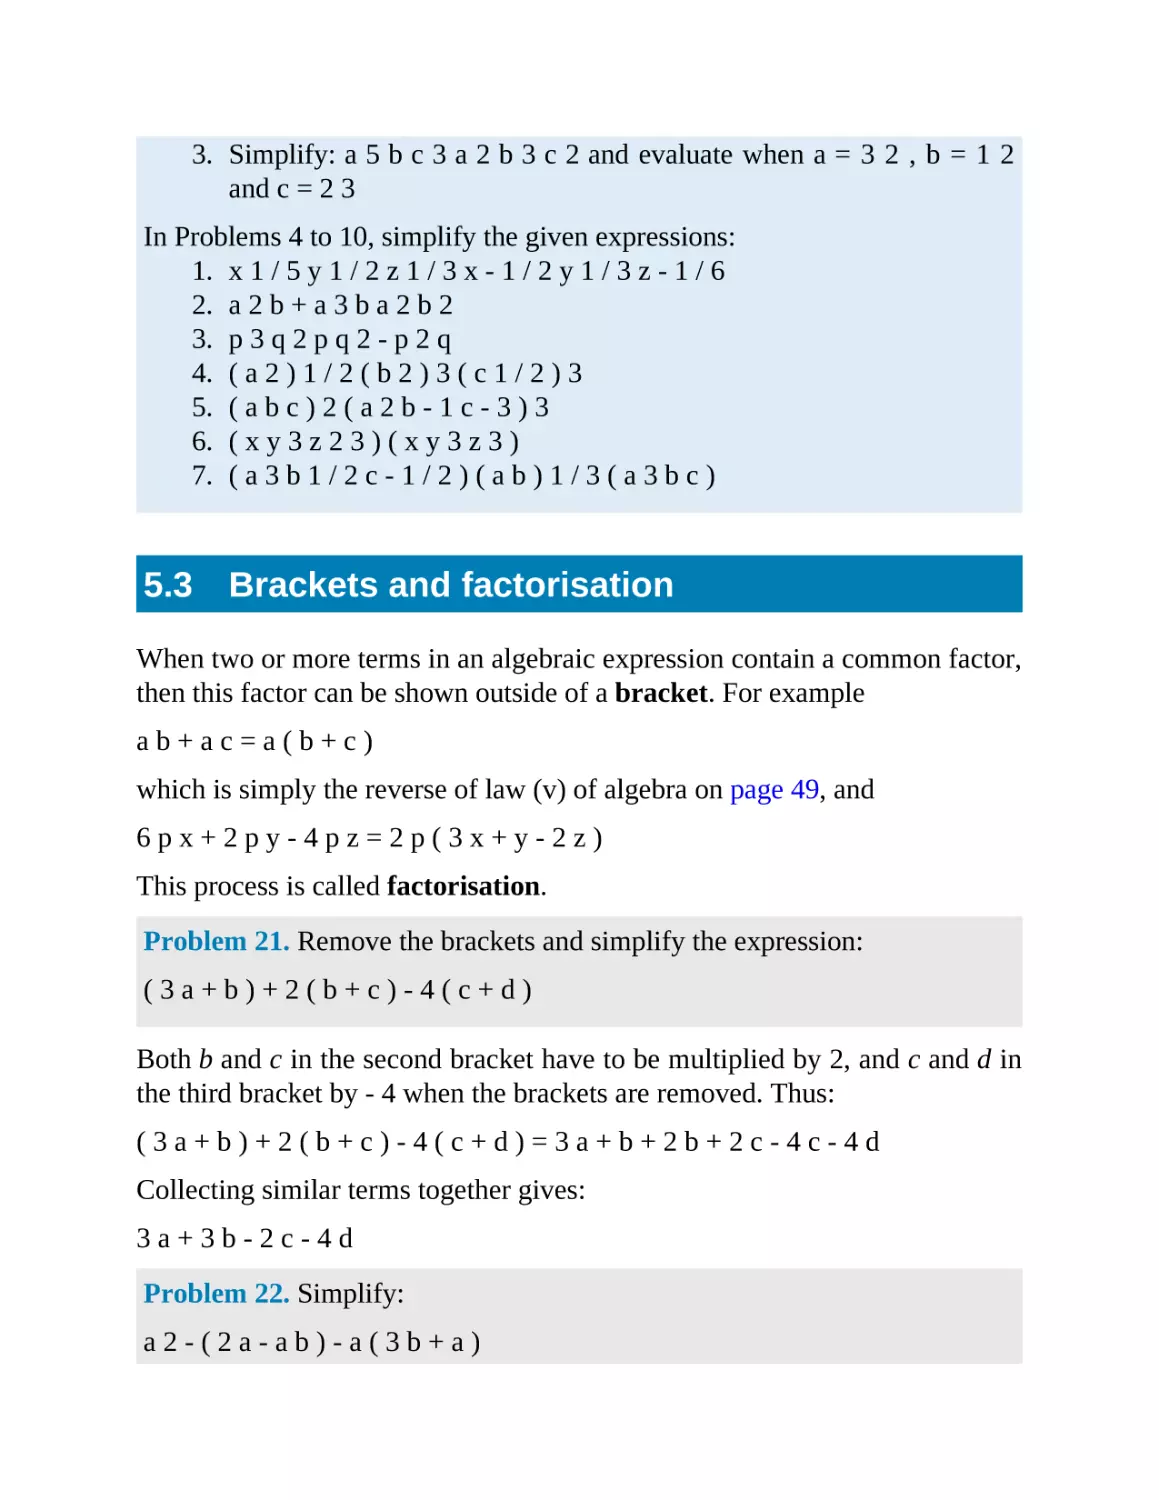 5.3 Brackets and factorisation